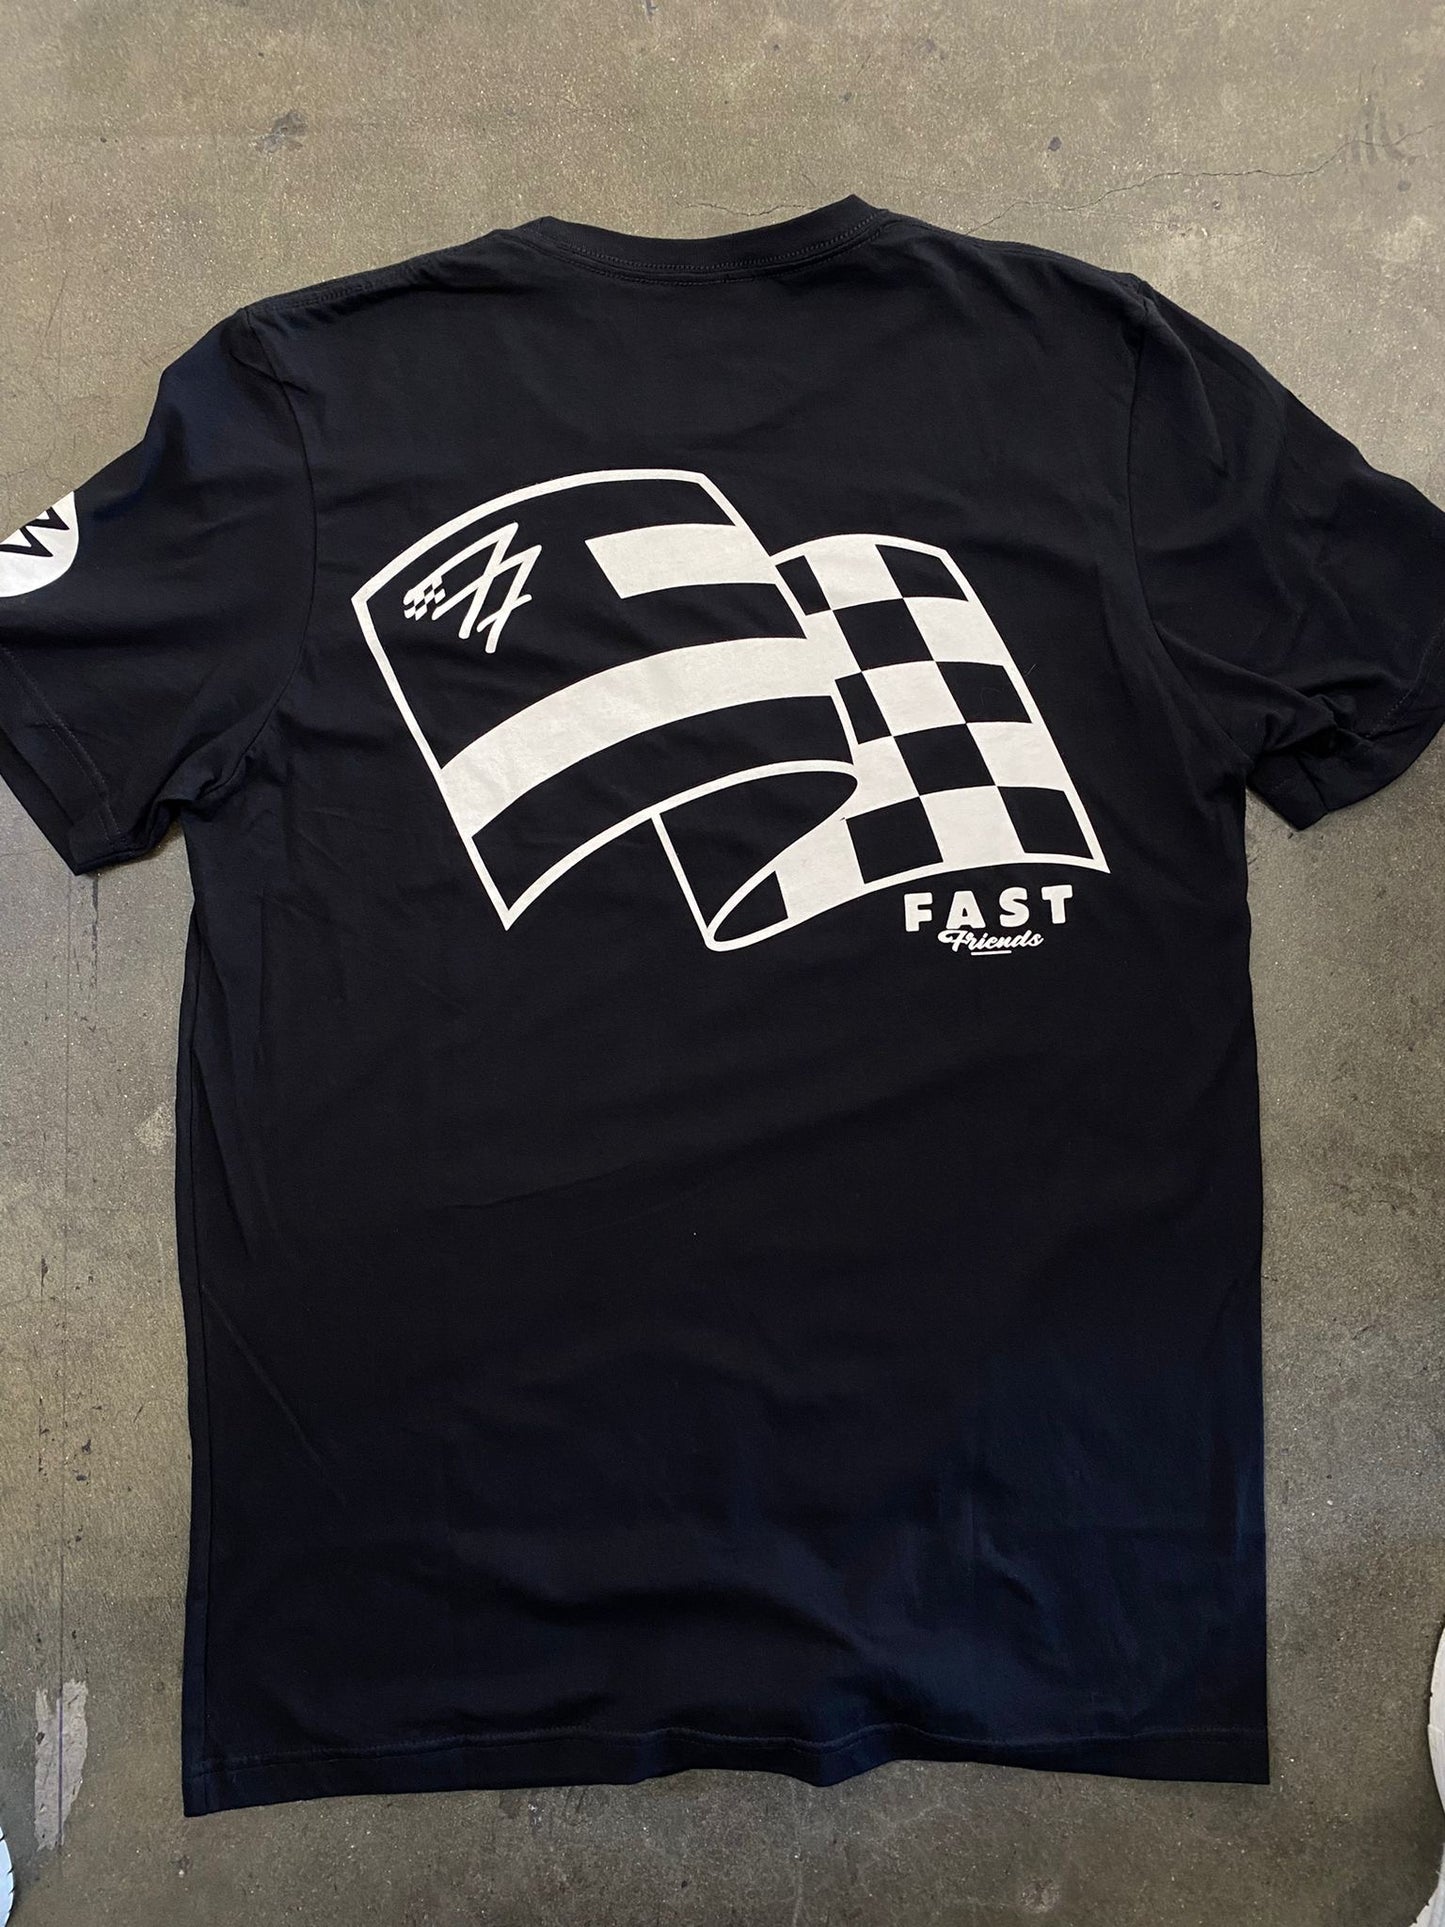 Fast is Fun Shirt